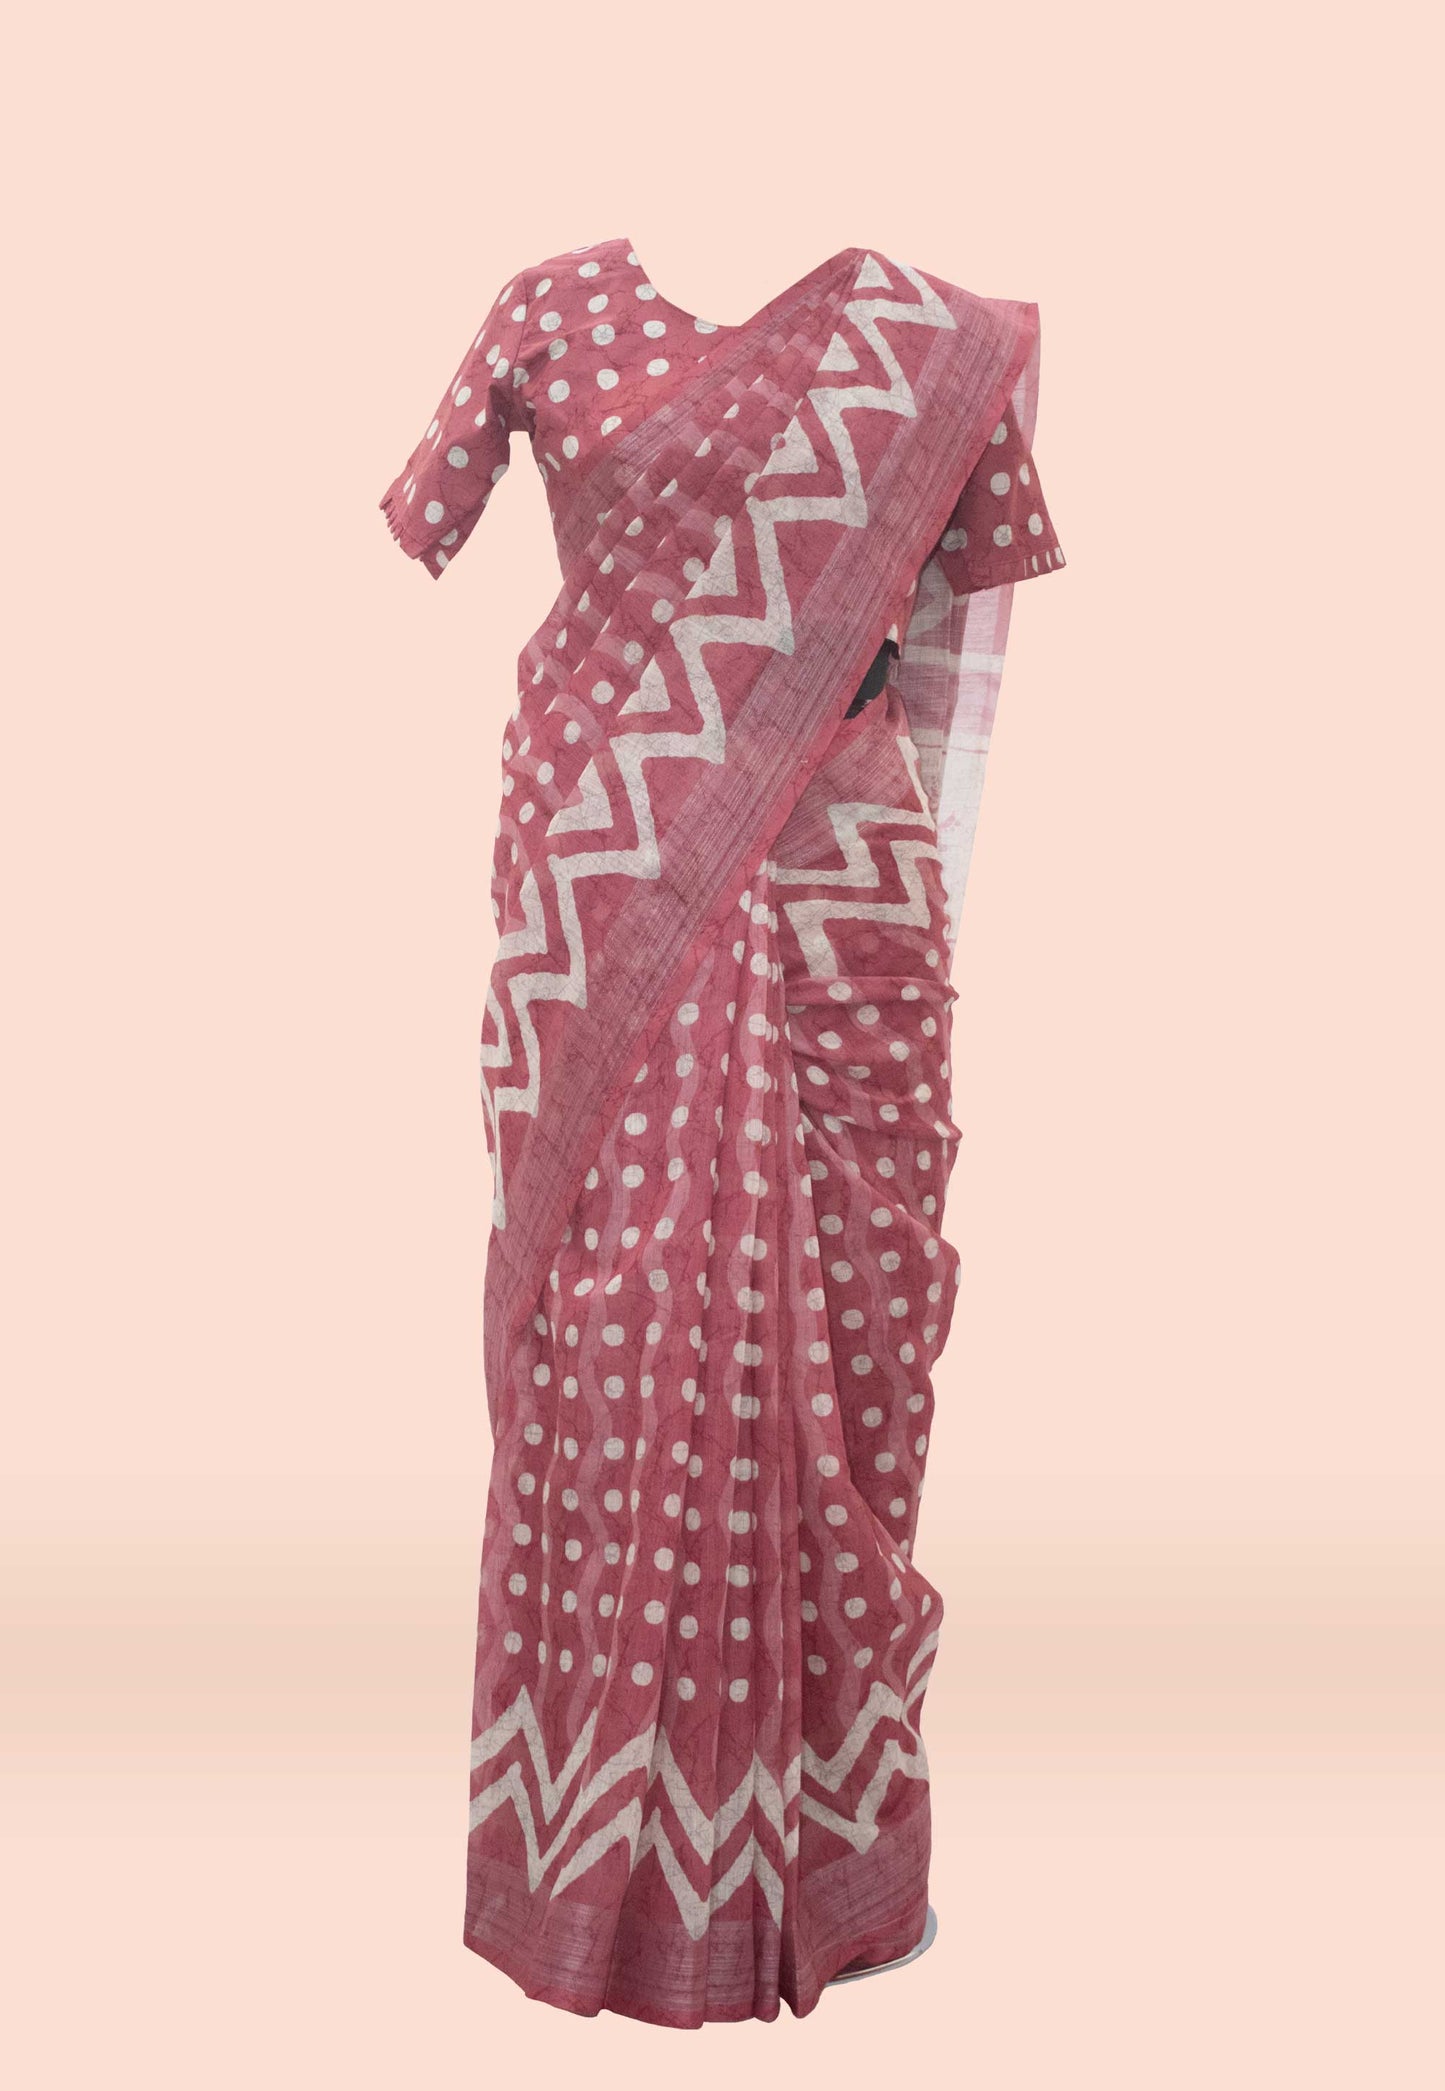 Digital Printed Linen Saree in Old Rose